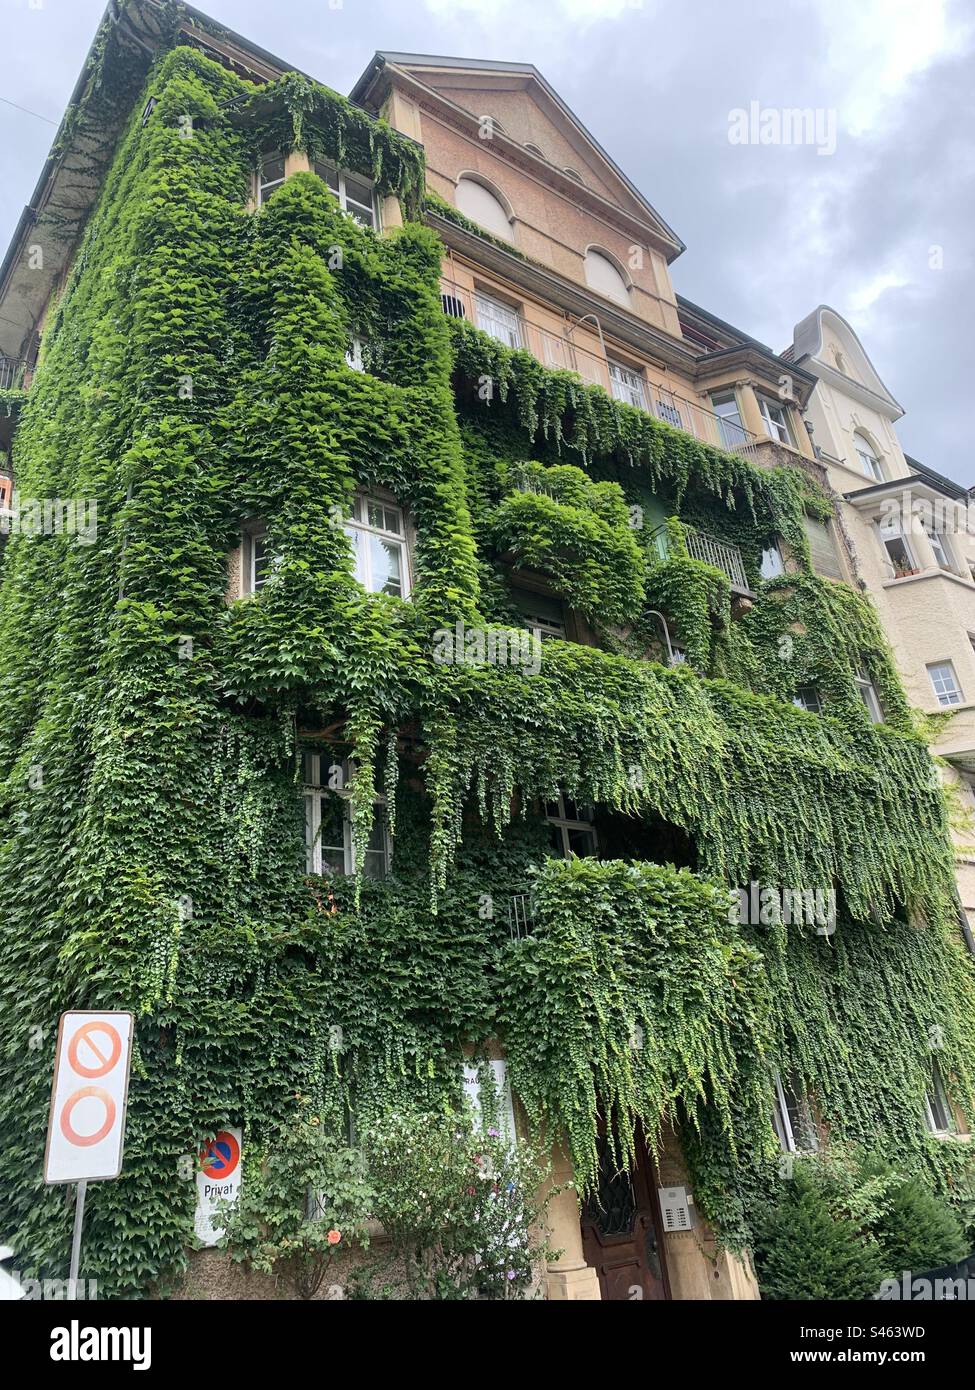 Bushy house with overgrown plants in Switzerland Stock Photo